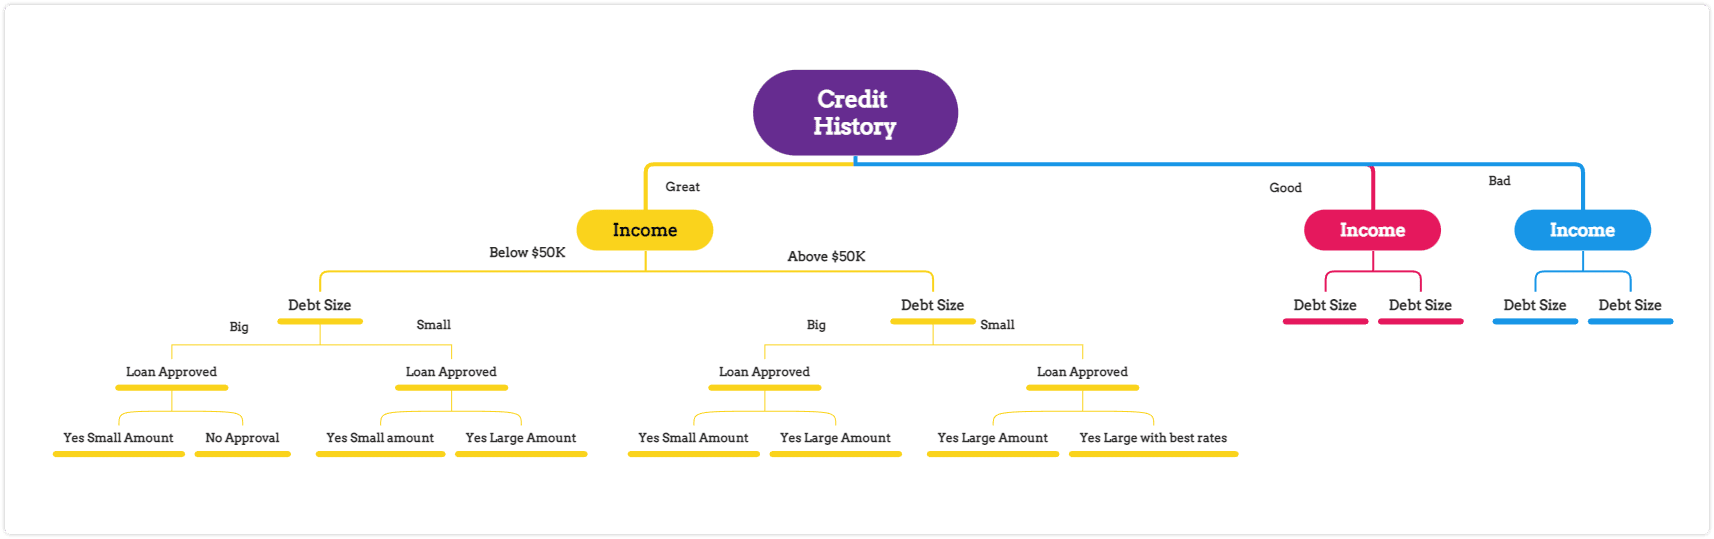 Credit history diagram tree example